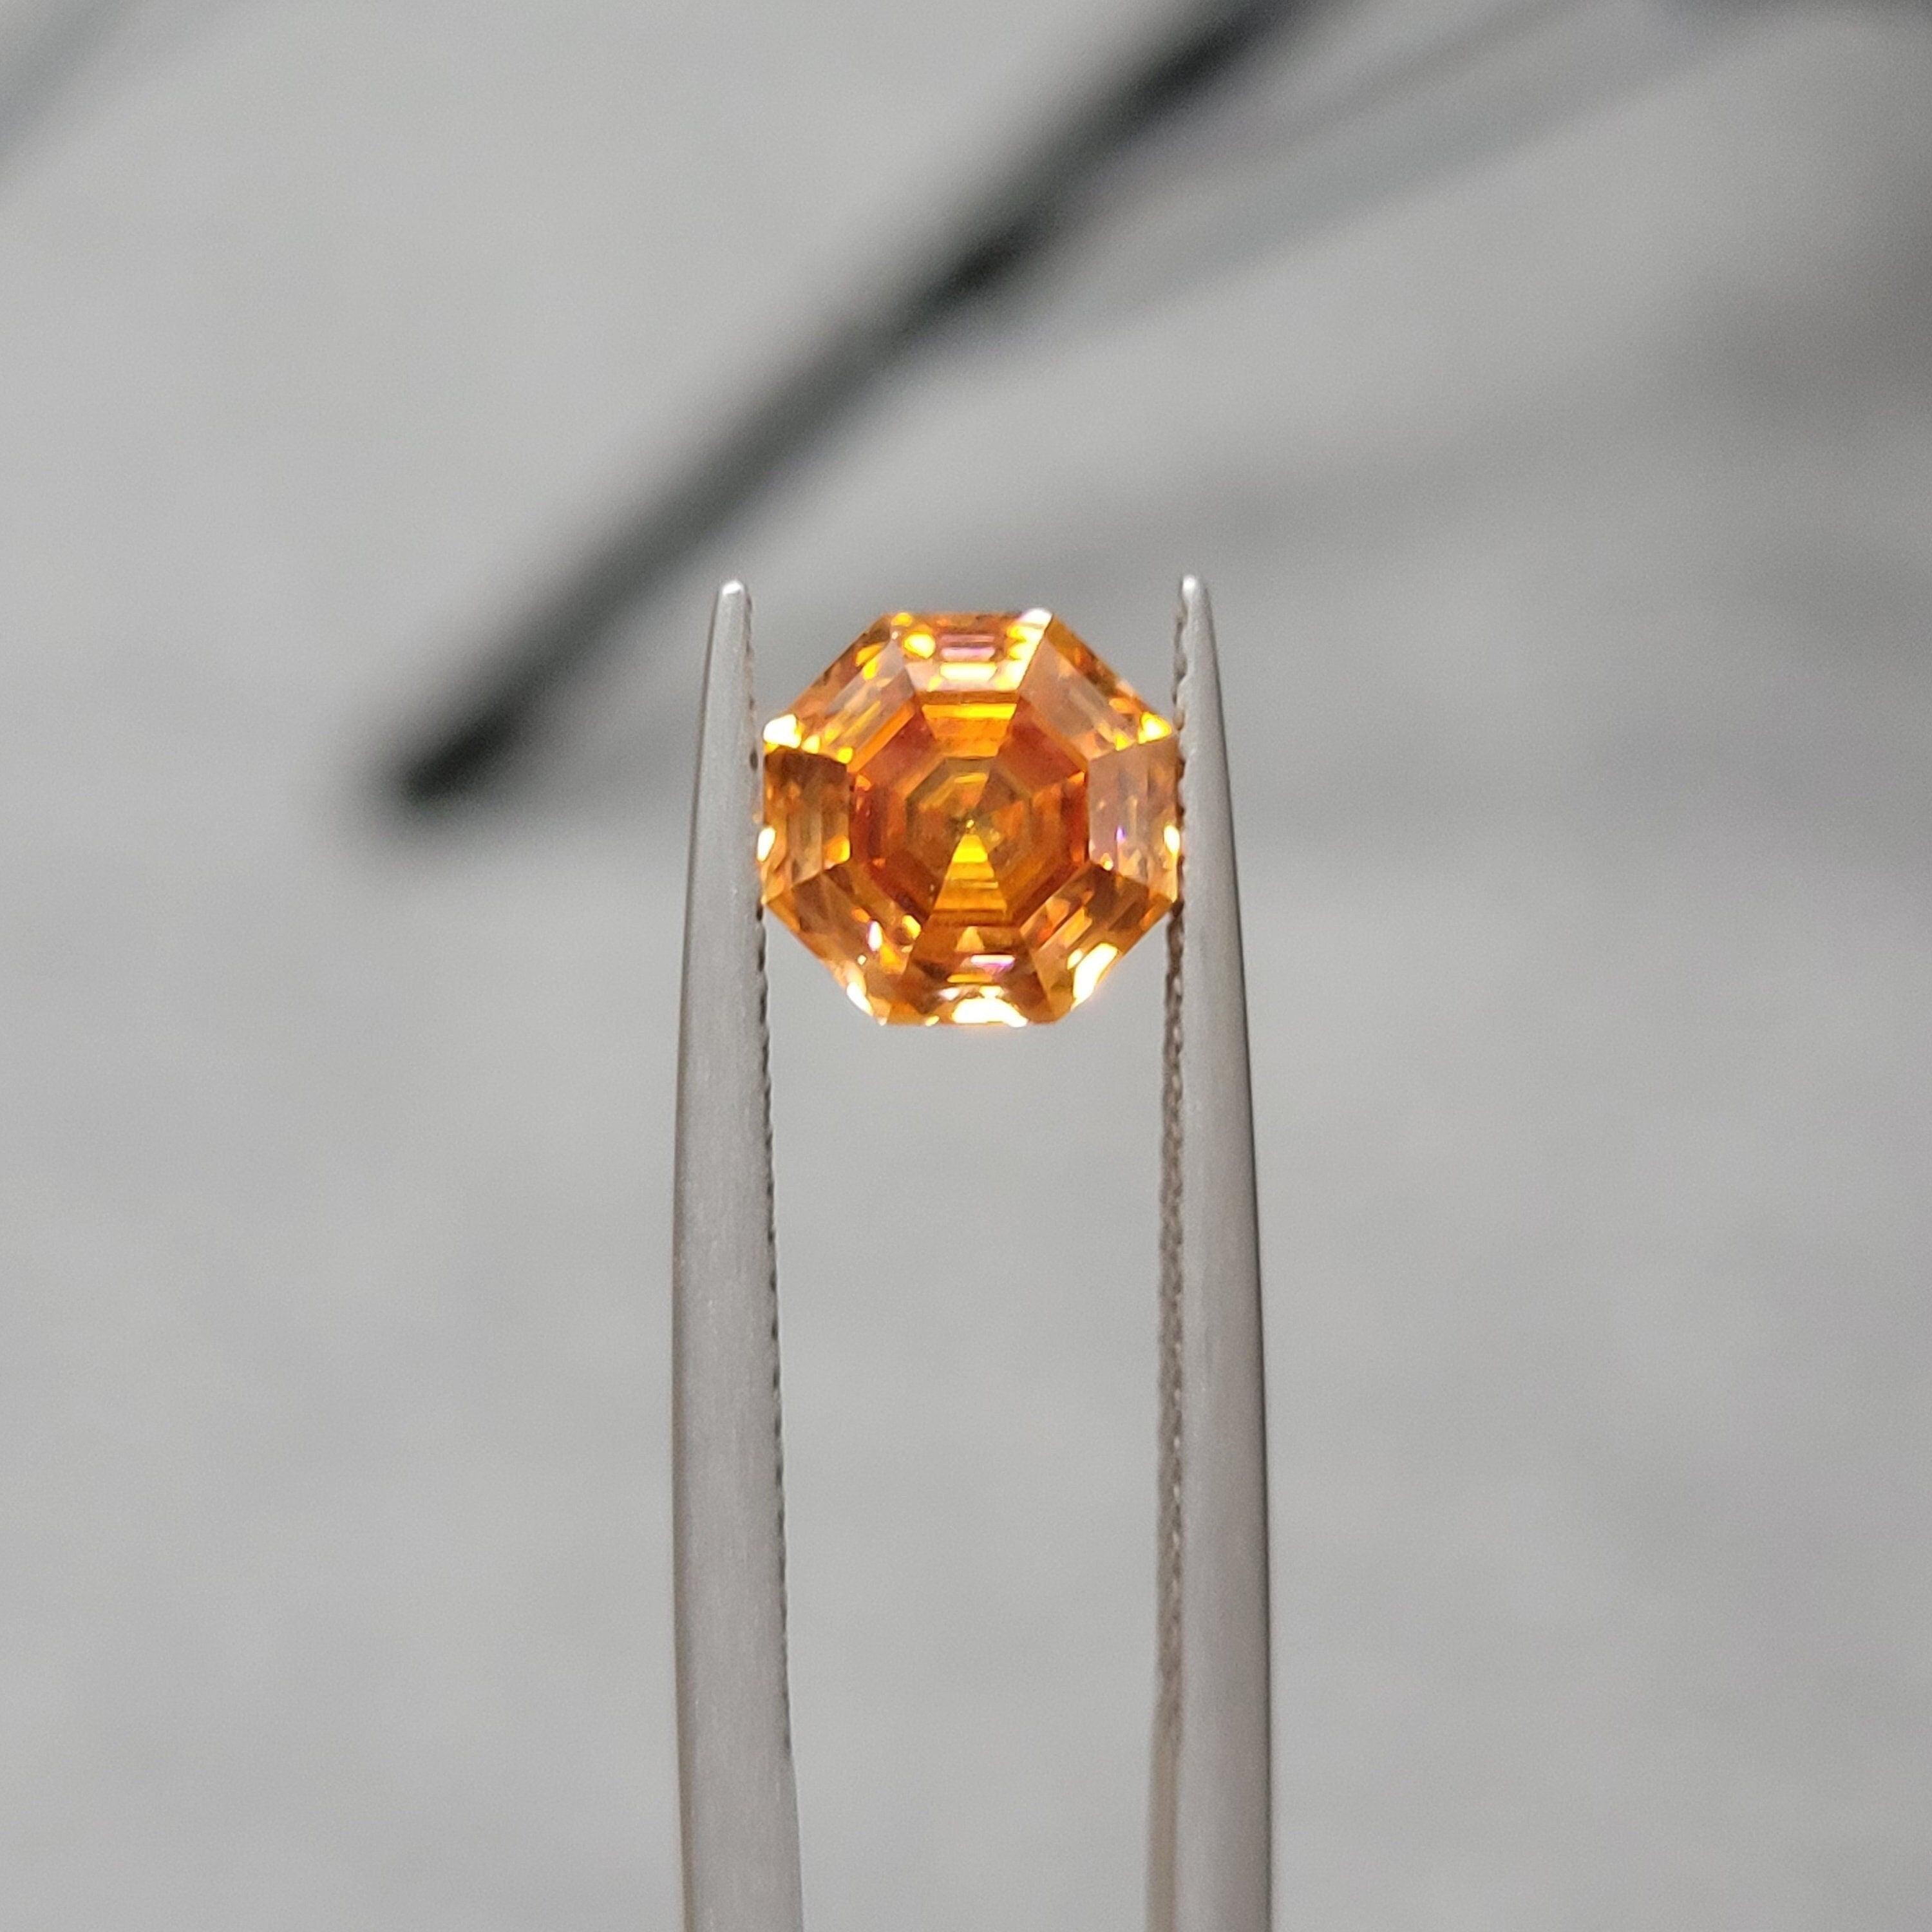 7mm 2ct loose moissanite certified vvs1 sweet orange octagon cut gra laboratory gemstone